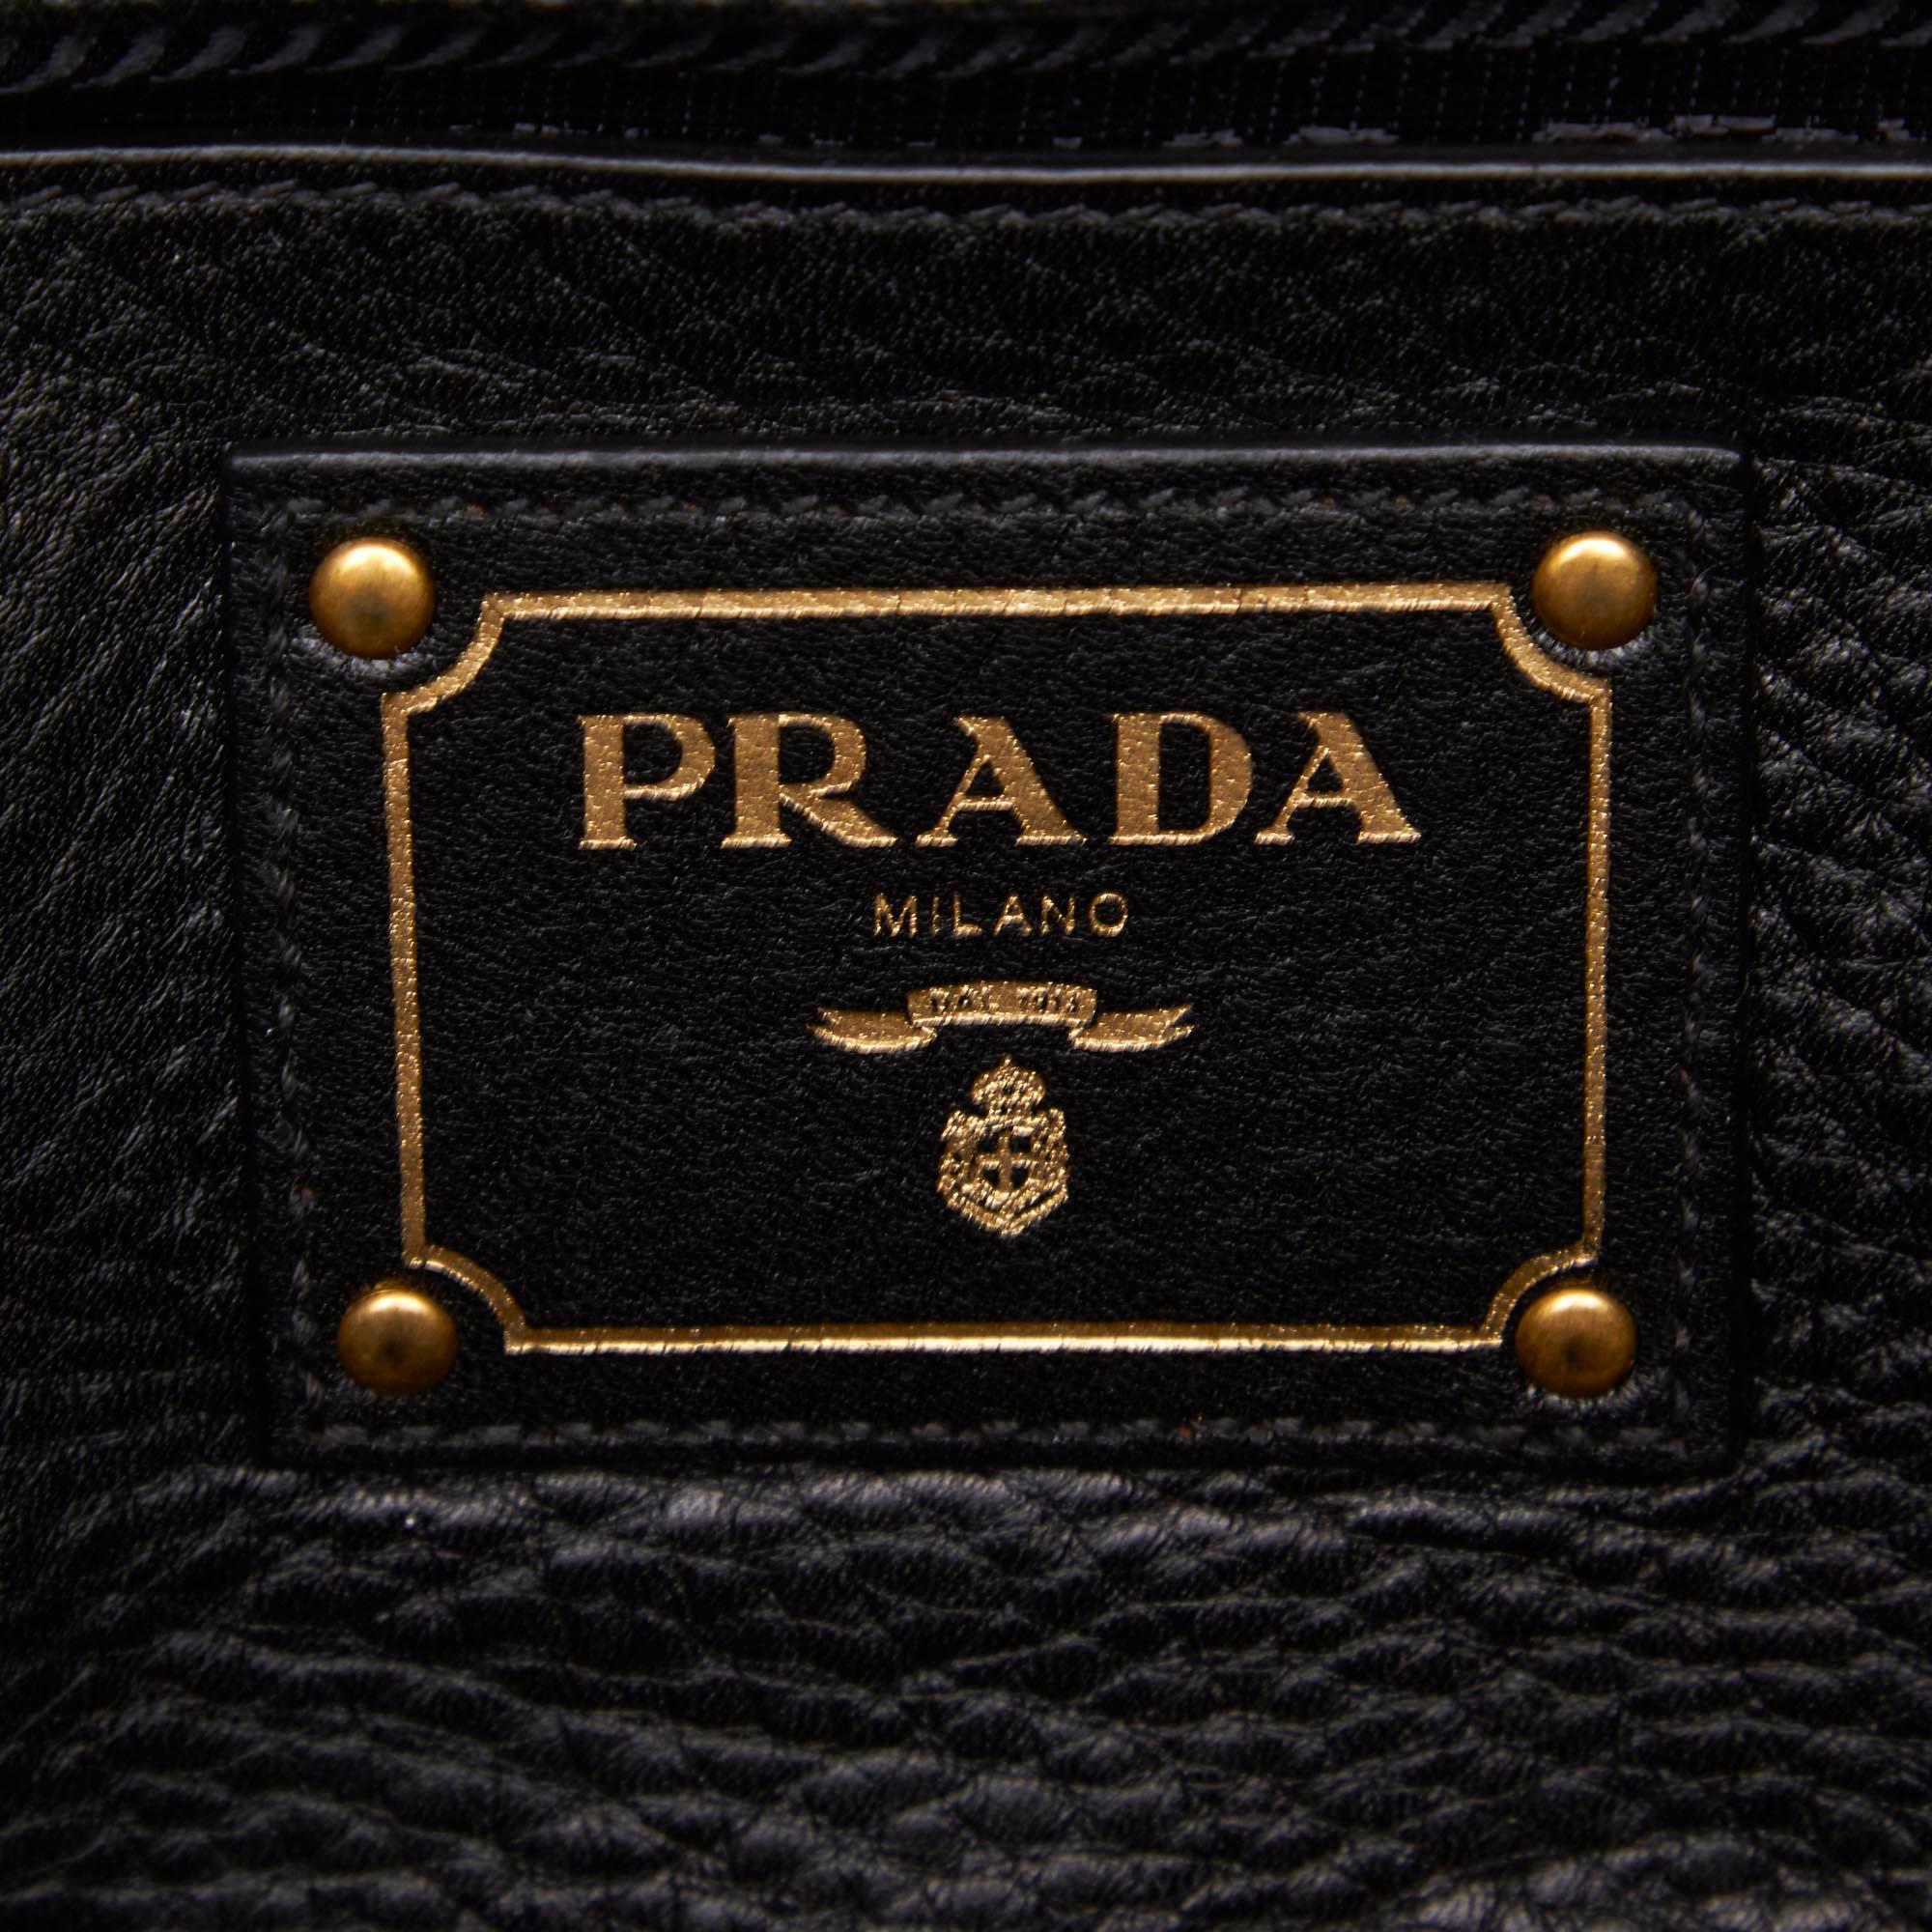 Prada Black Leather Satchel For Sale 2